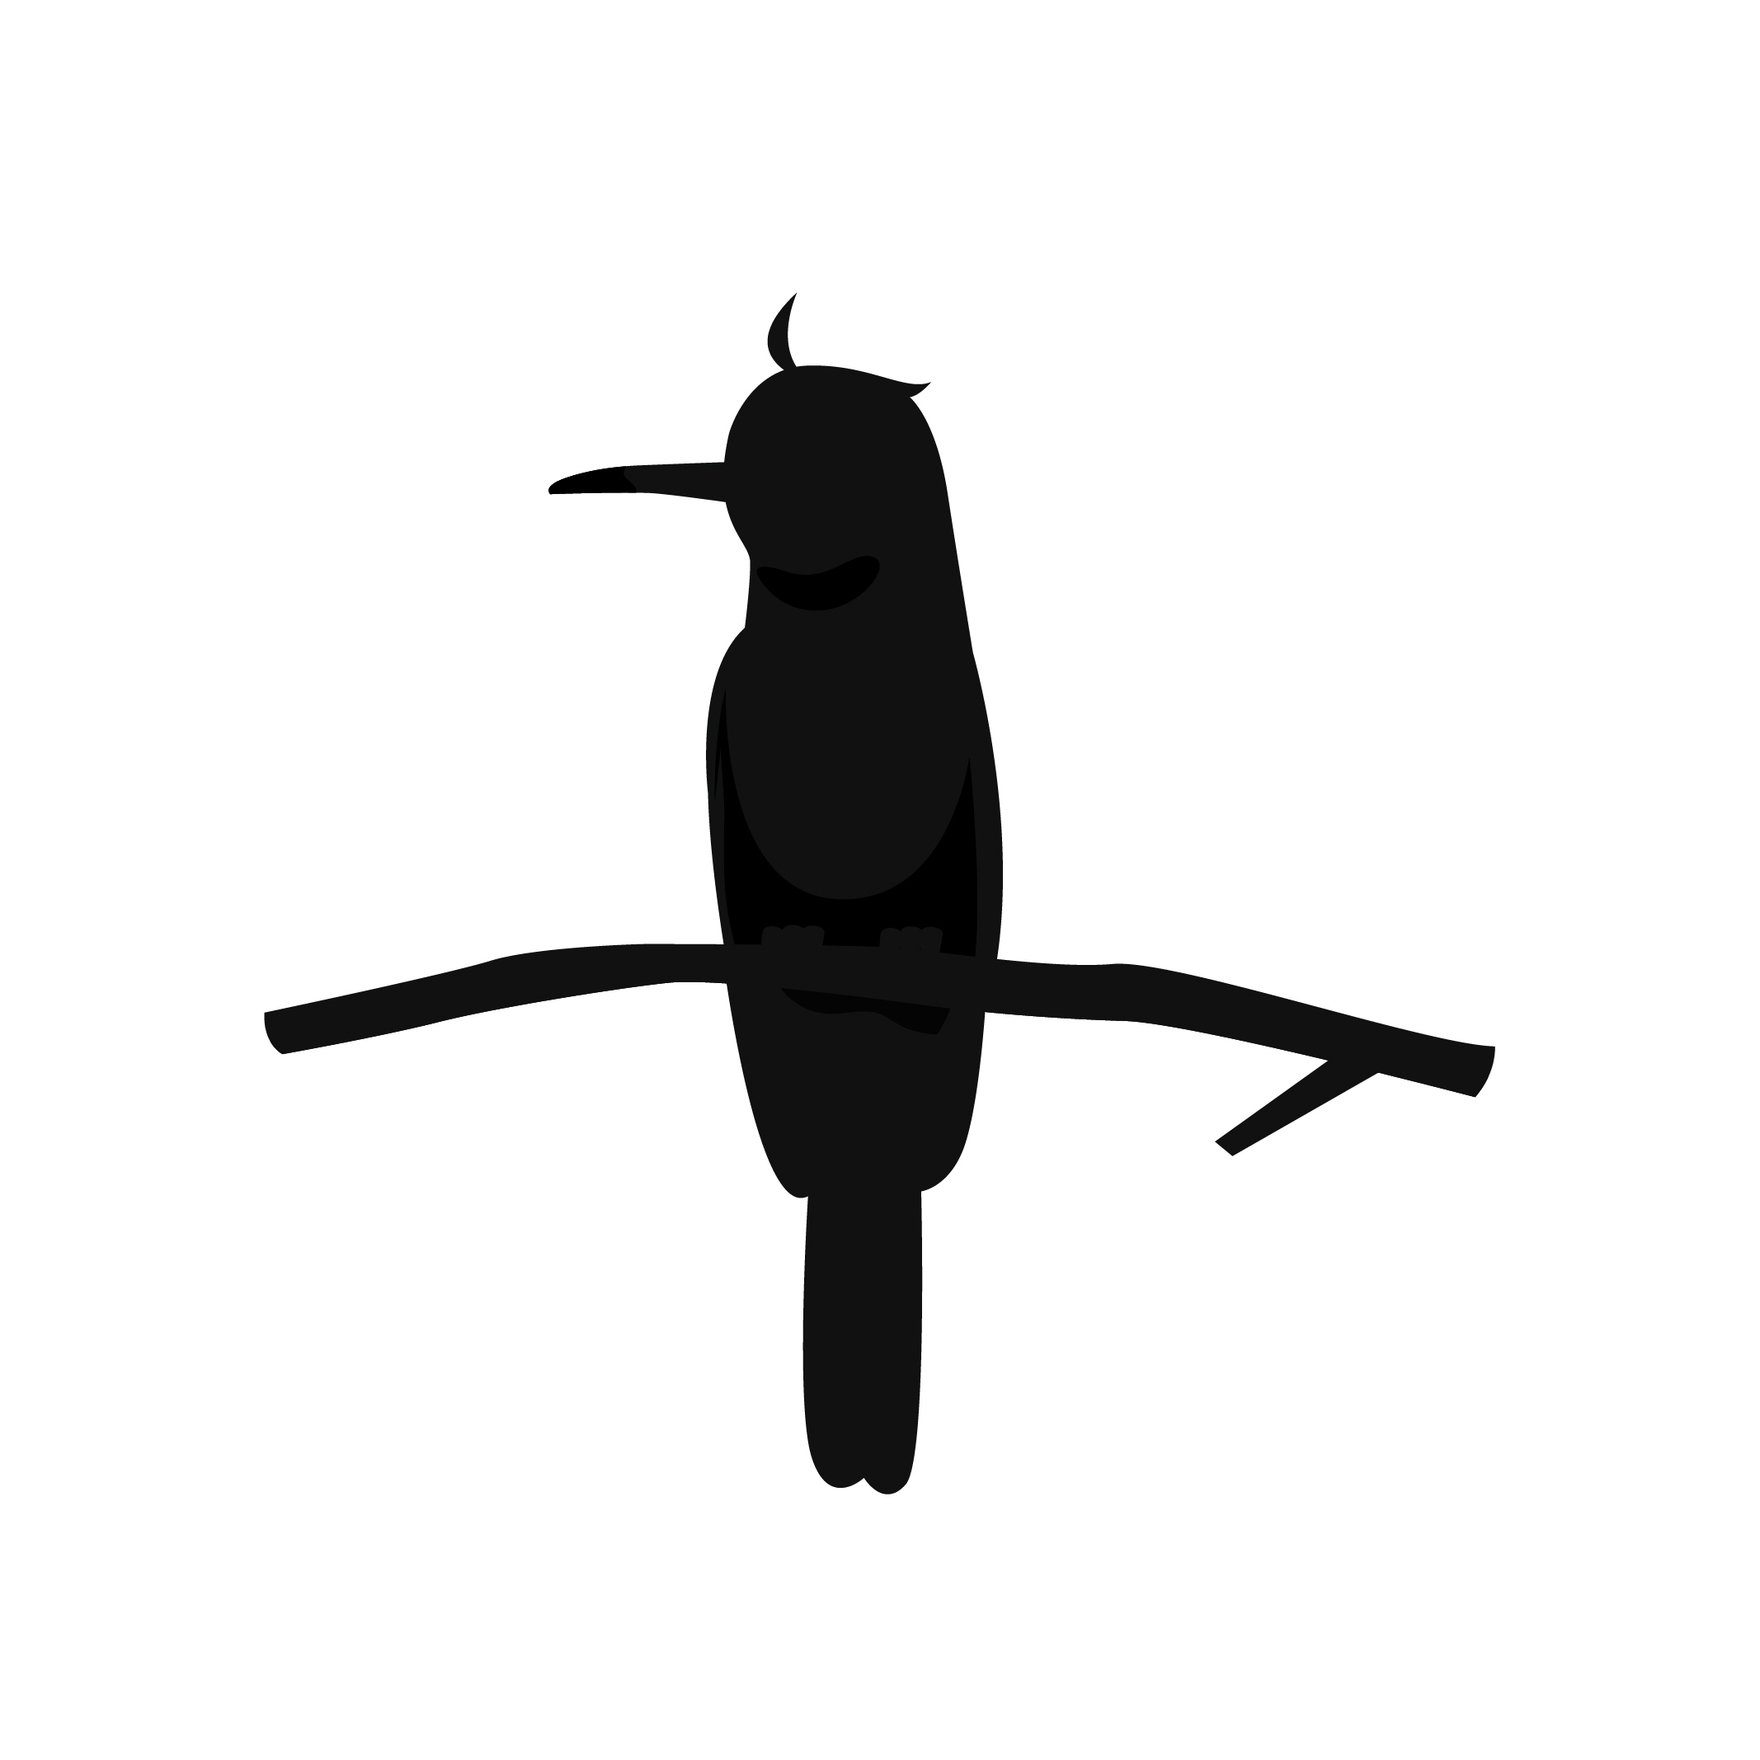 Sitting Bird Silhouette in Illustrator, EPS, SVG, JPG, PNG